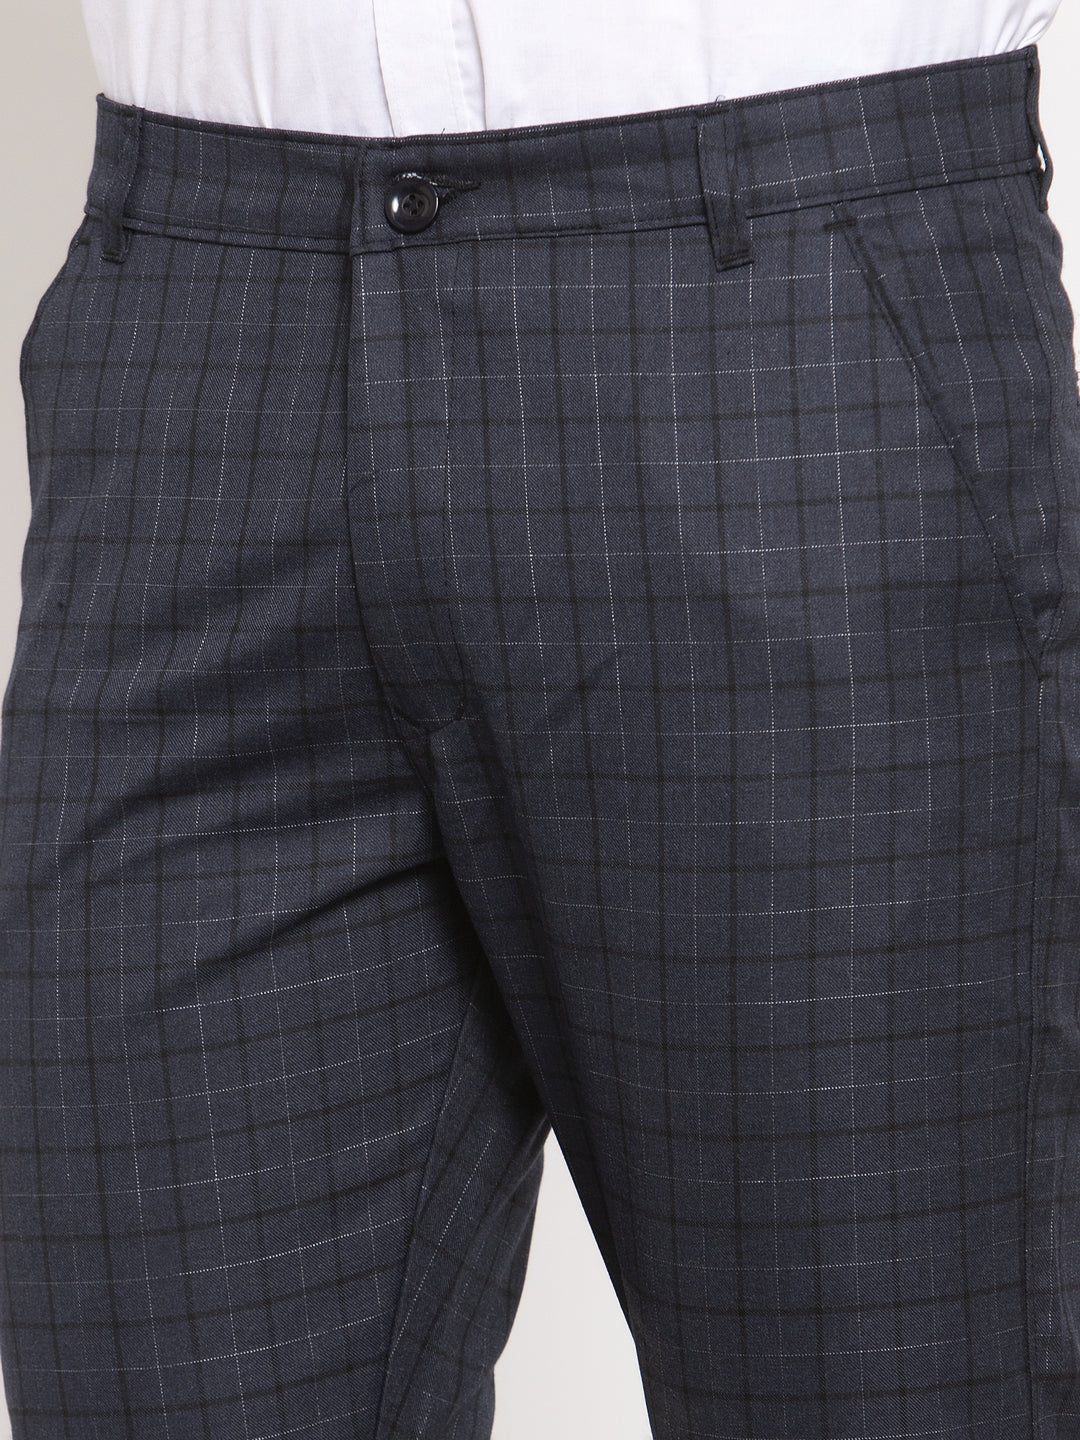 Men's Black Cotton Checked Formal Trousers ( GP 259Black ) - Jainish